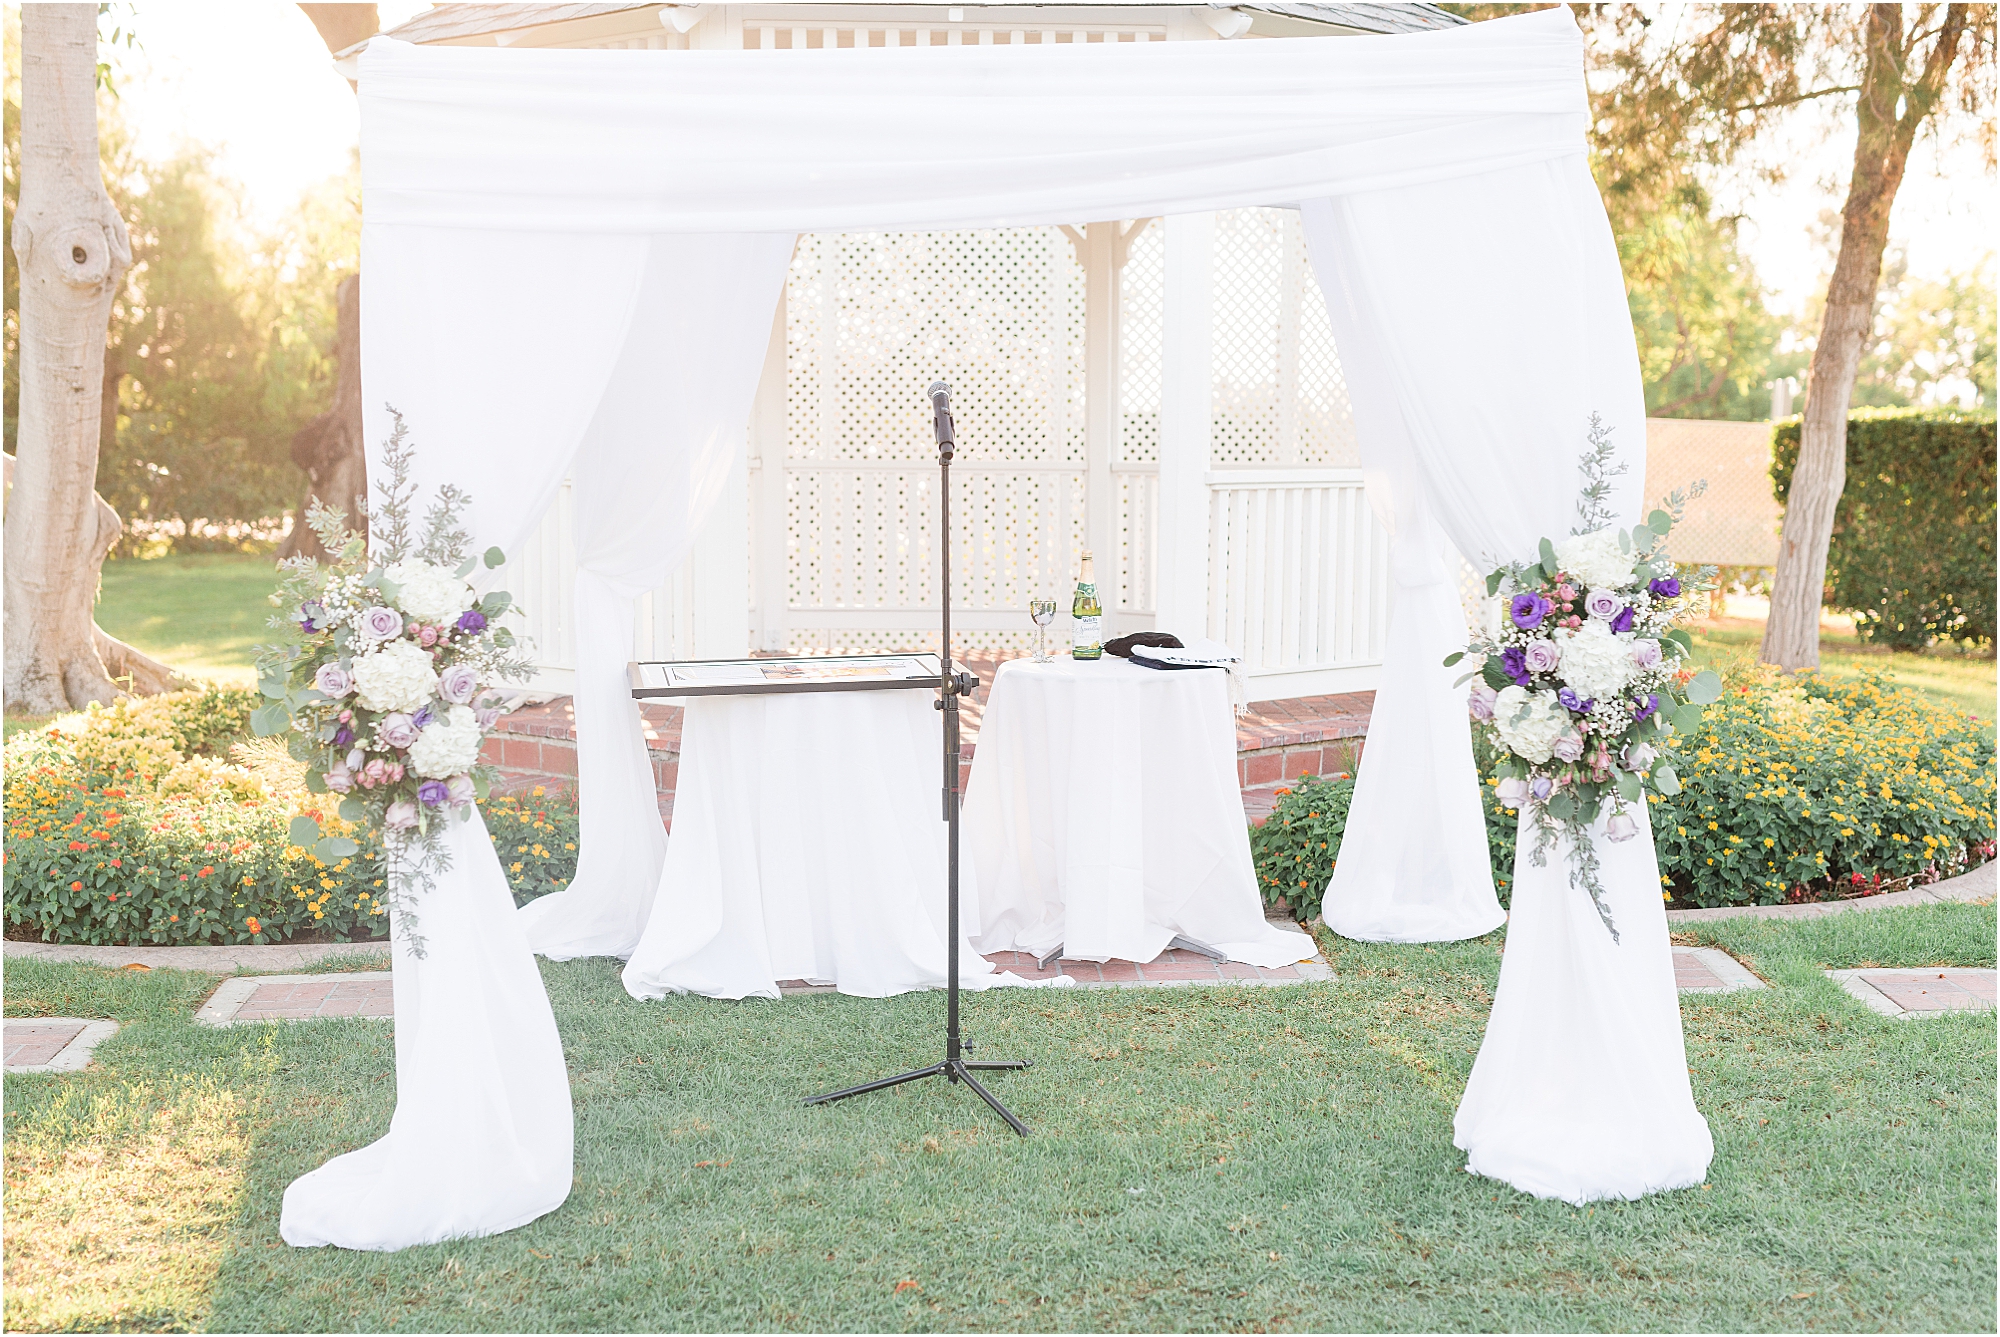 Placentia CA Wedding Photographer | Alta Vista Country Club Wedding  | Jewish Wedding